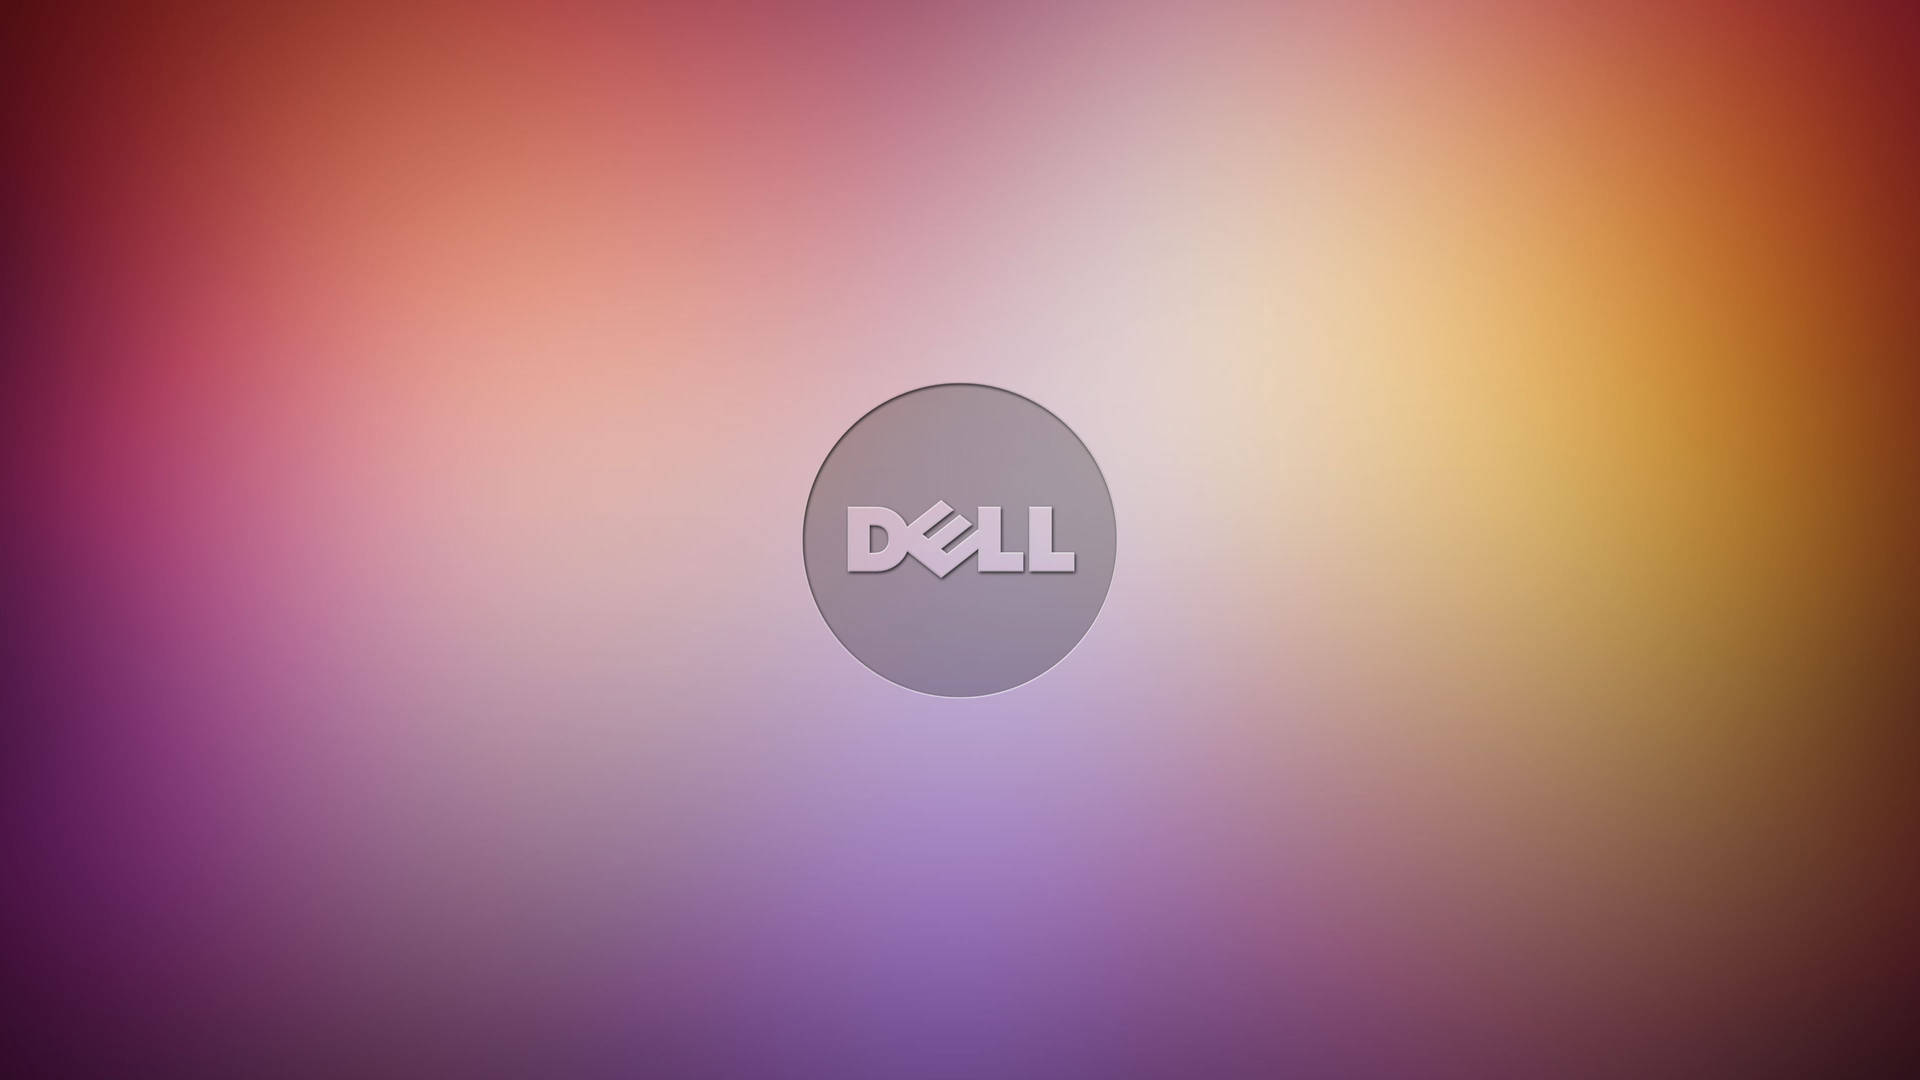 Dell Laptop Blurry Gradient Wallpaper